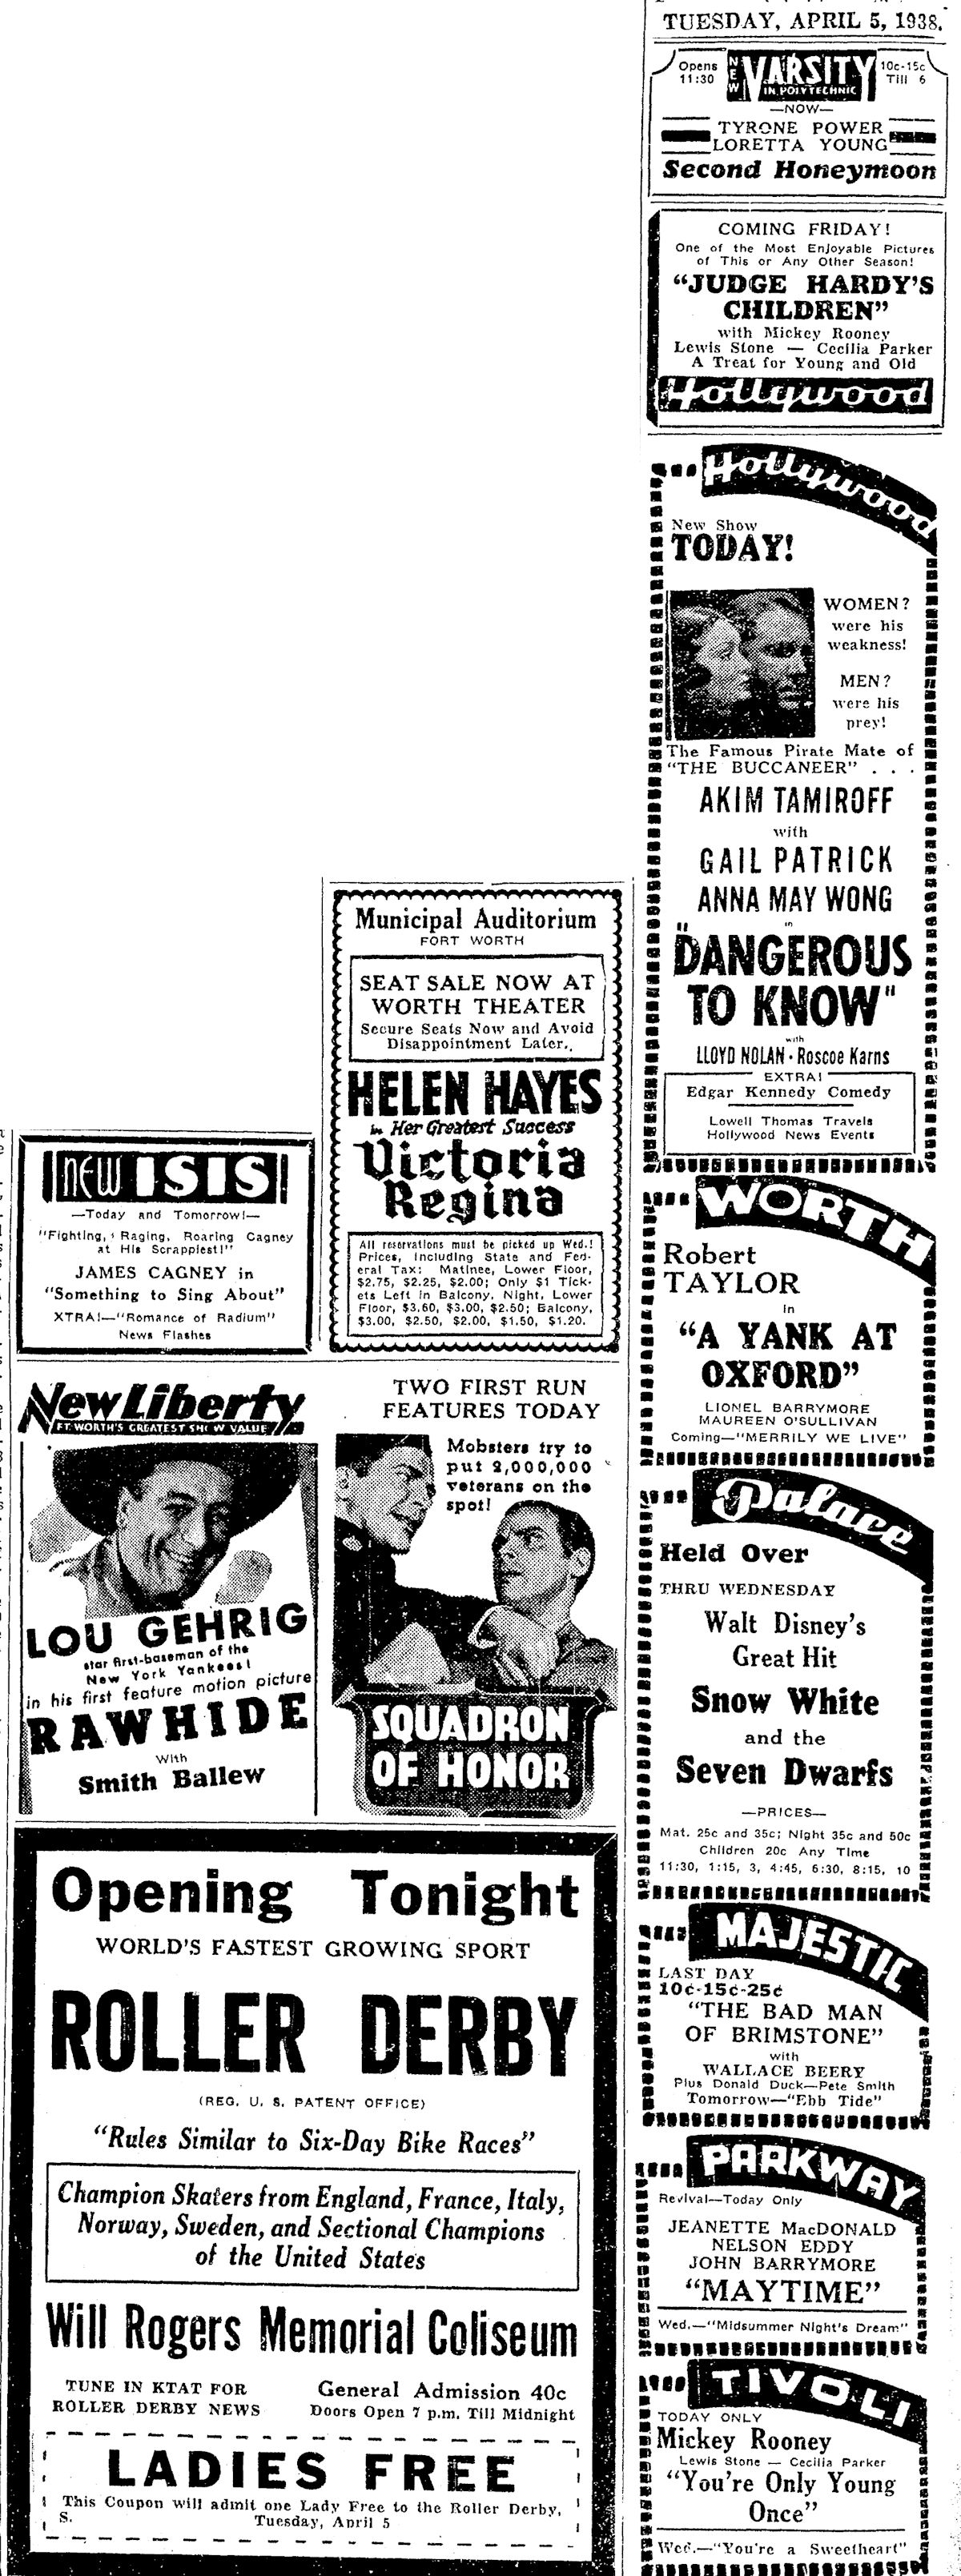 ballew-movies-1938